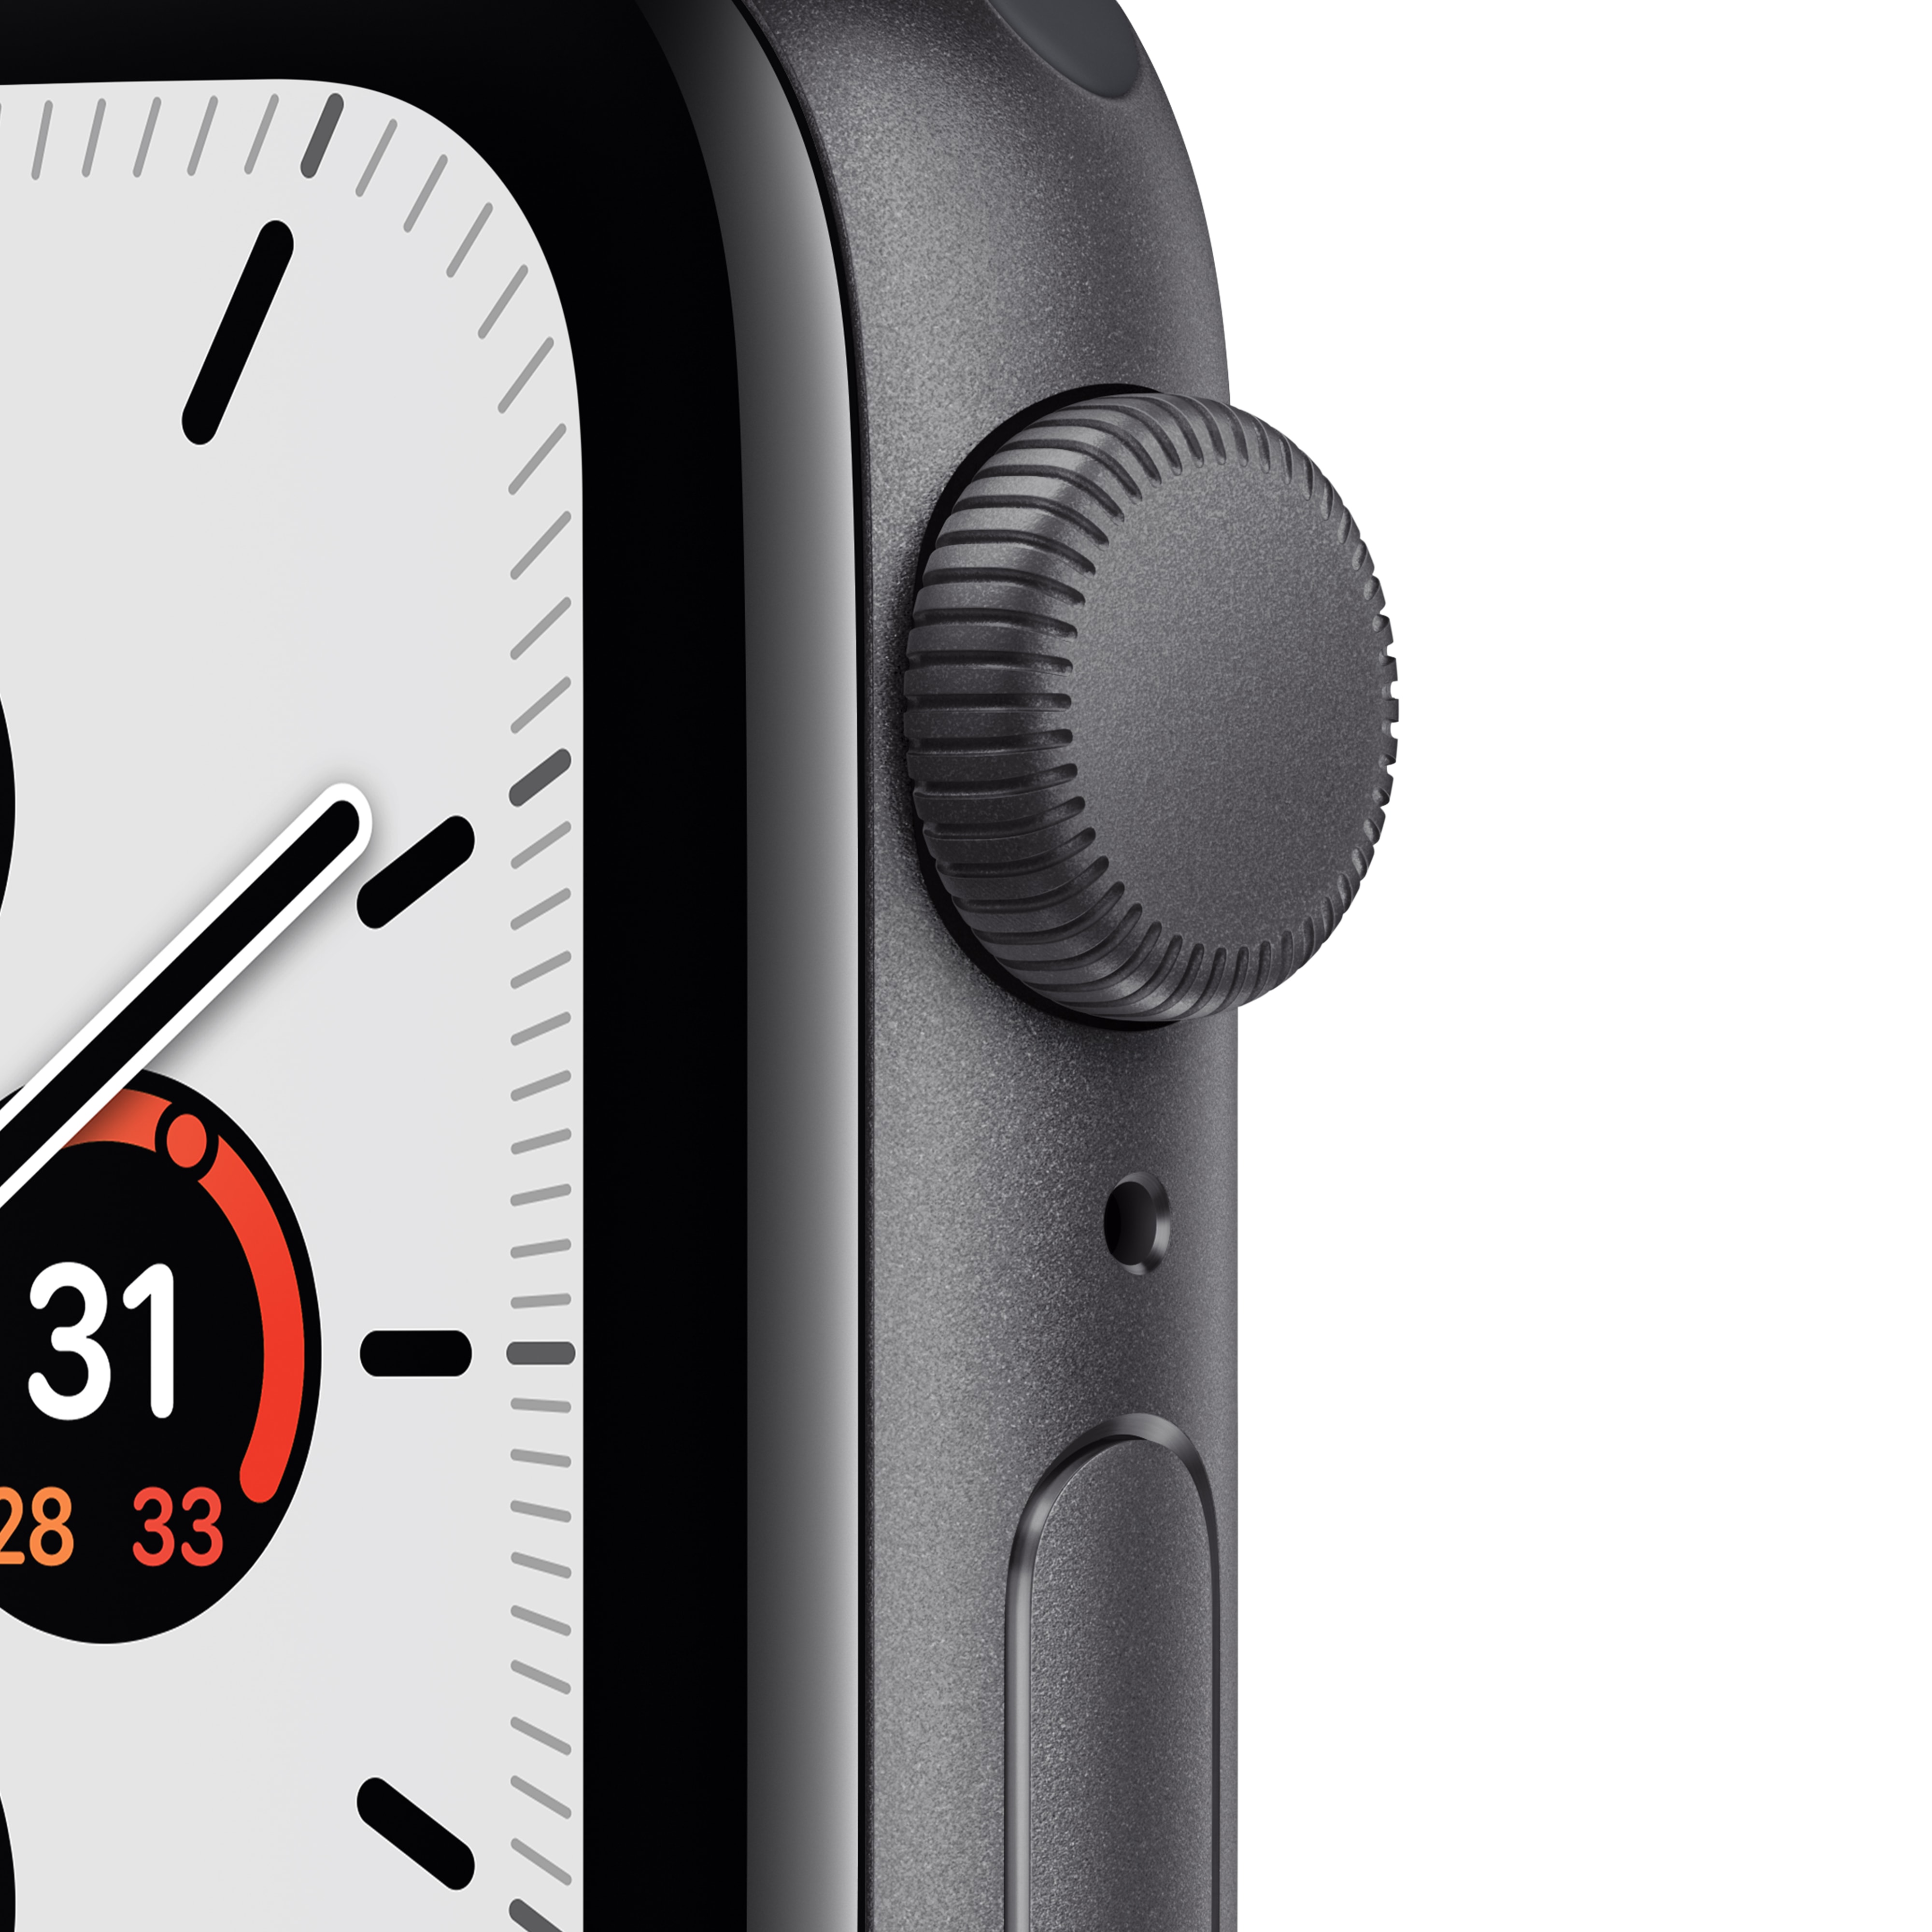 Apple Watch SE with Aluminium Case 2021 (GPS)